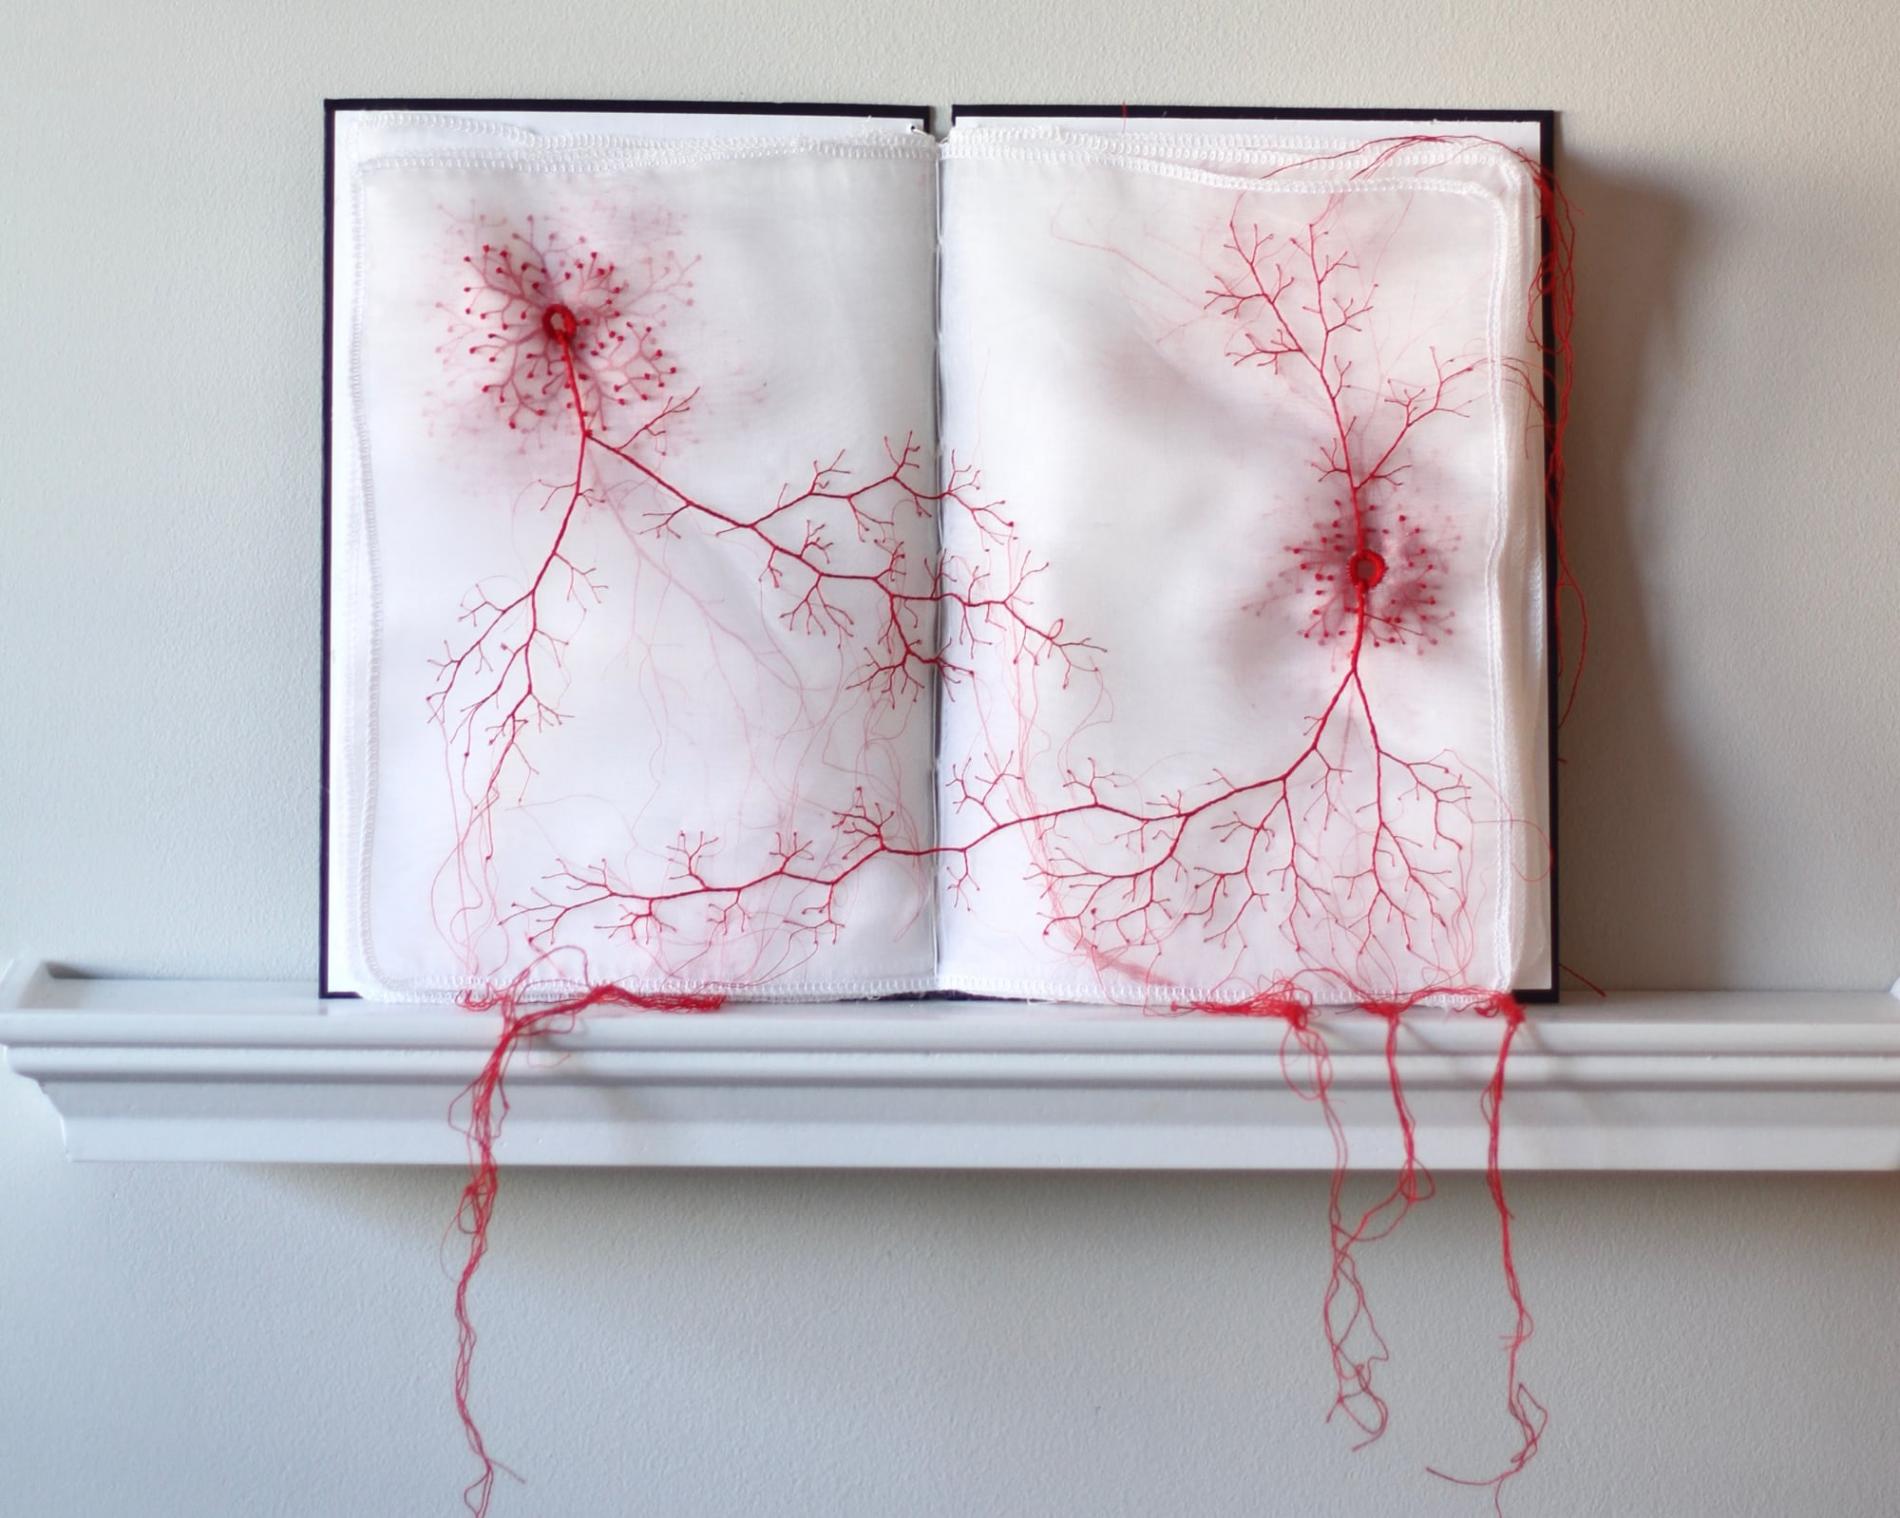 obra de artista japonesa rima day con hilo rojo obra textl libro